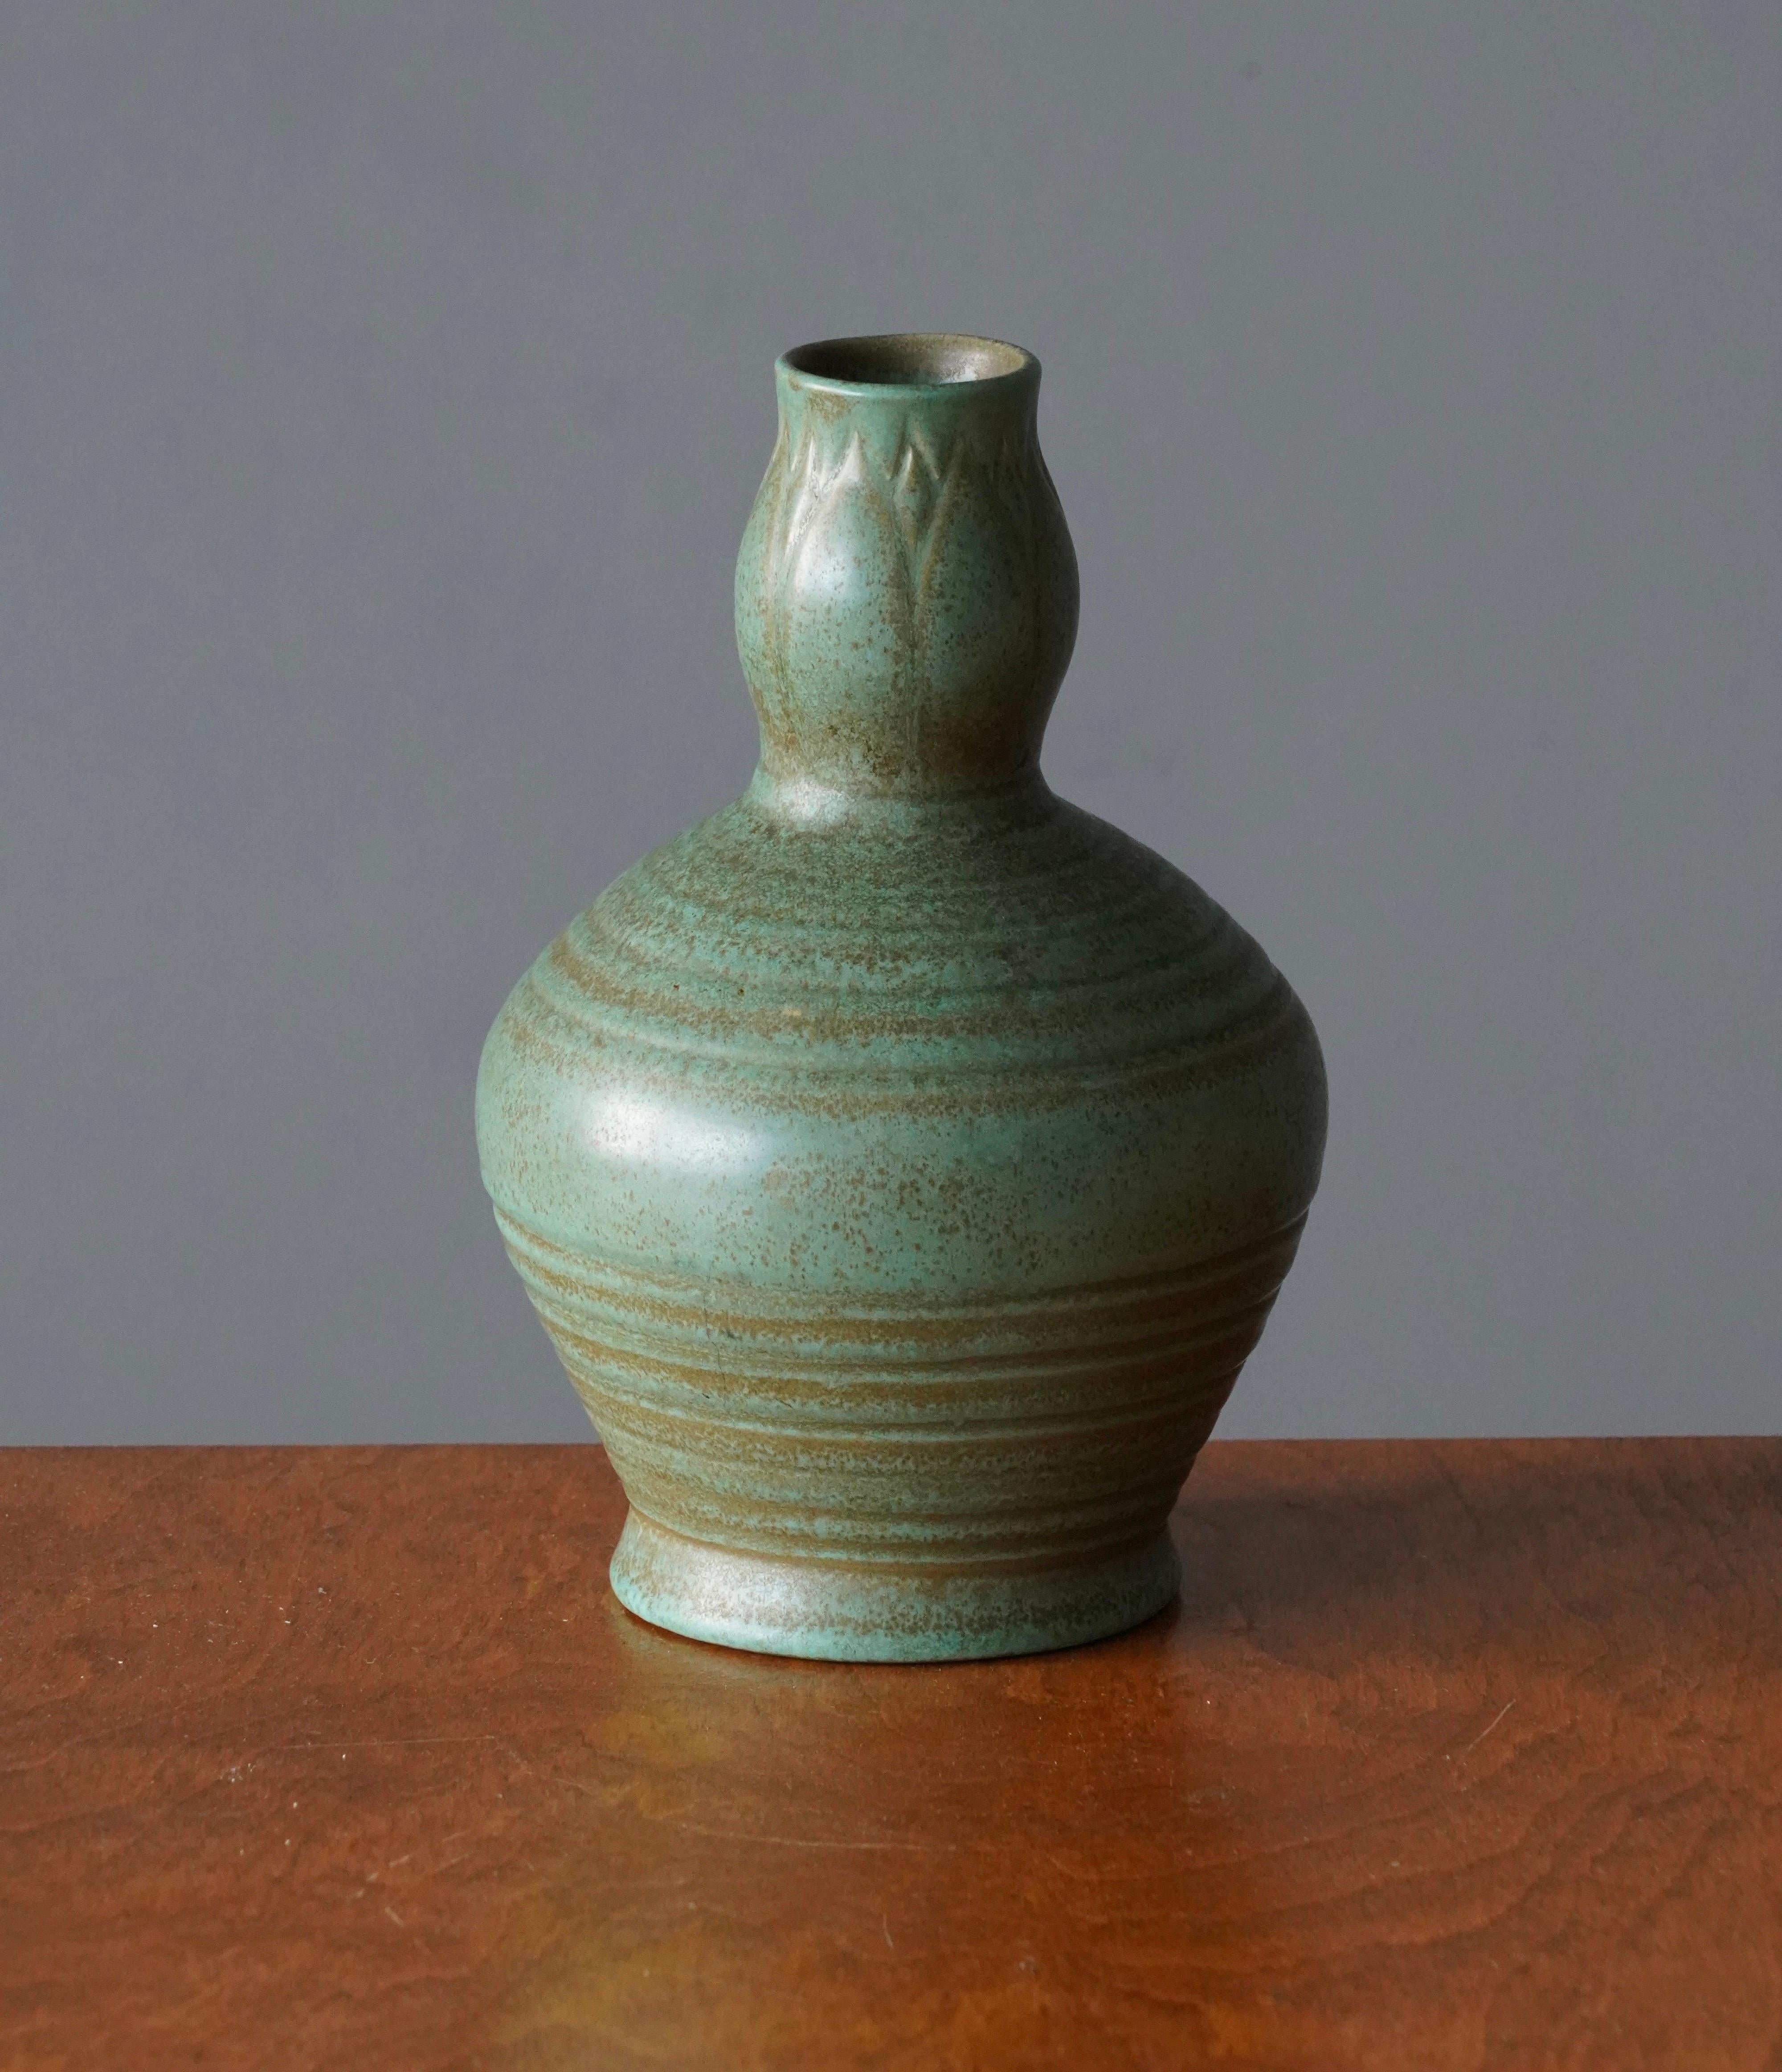 A vase. Designed by Ewald Dahlskog, produced by Bo Fajans, Sweden, 1930s. In earthenware, with subtle incised decor.

Marked 